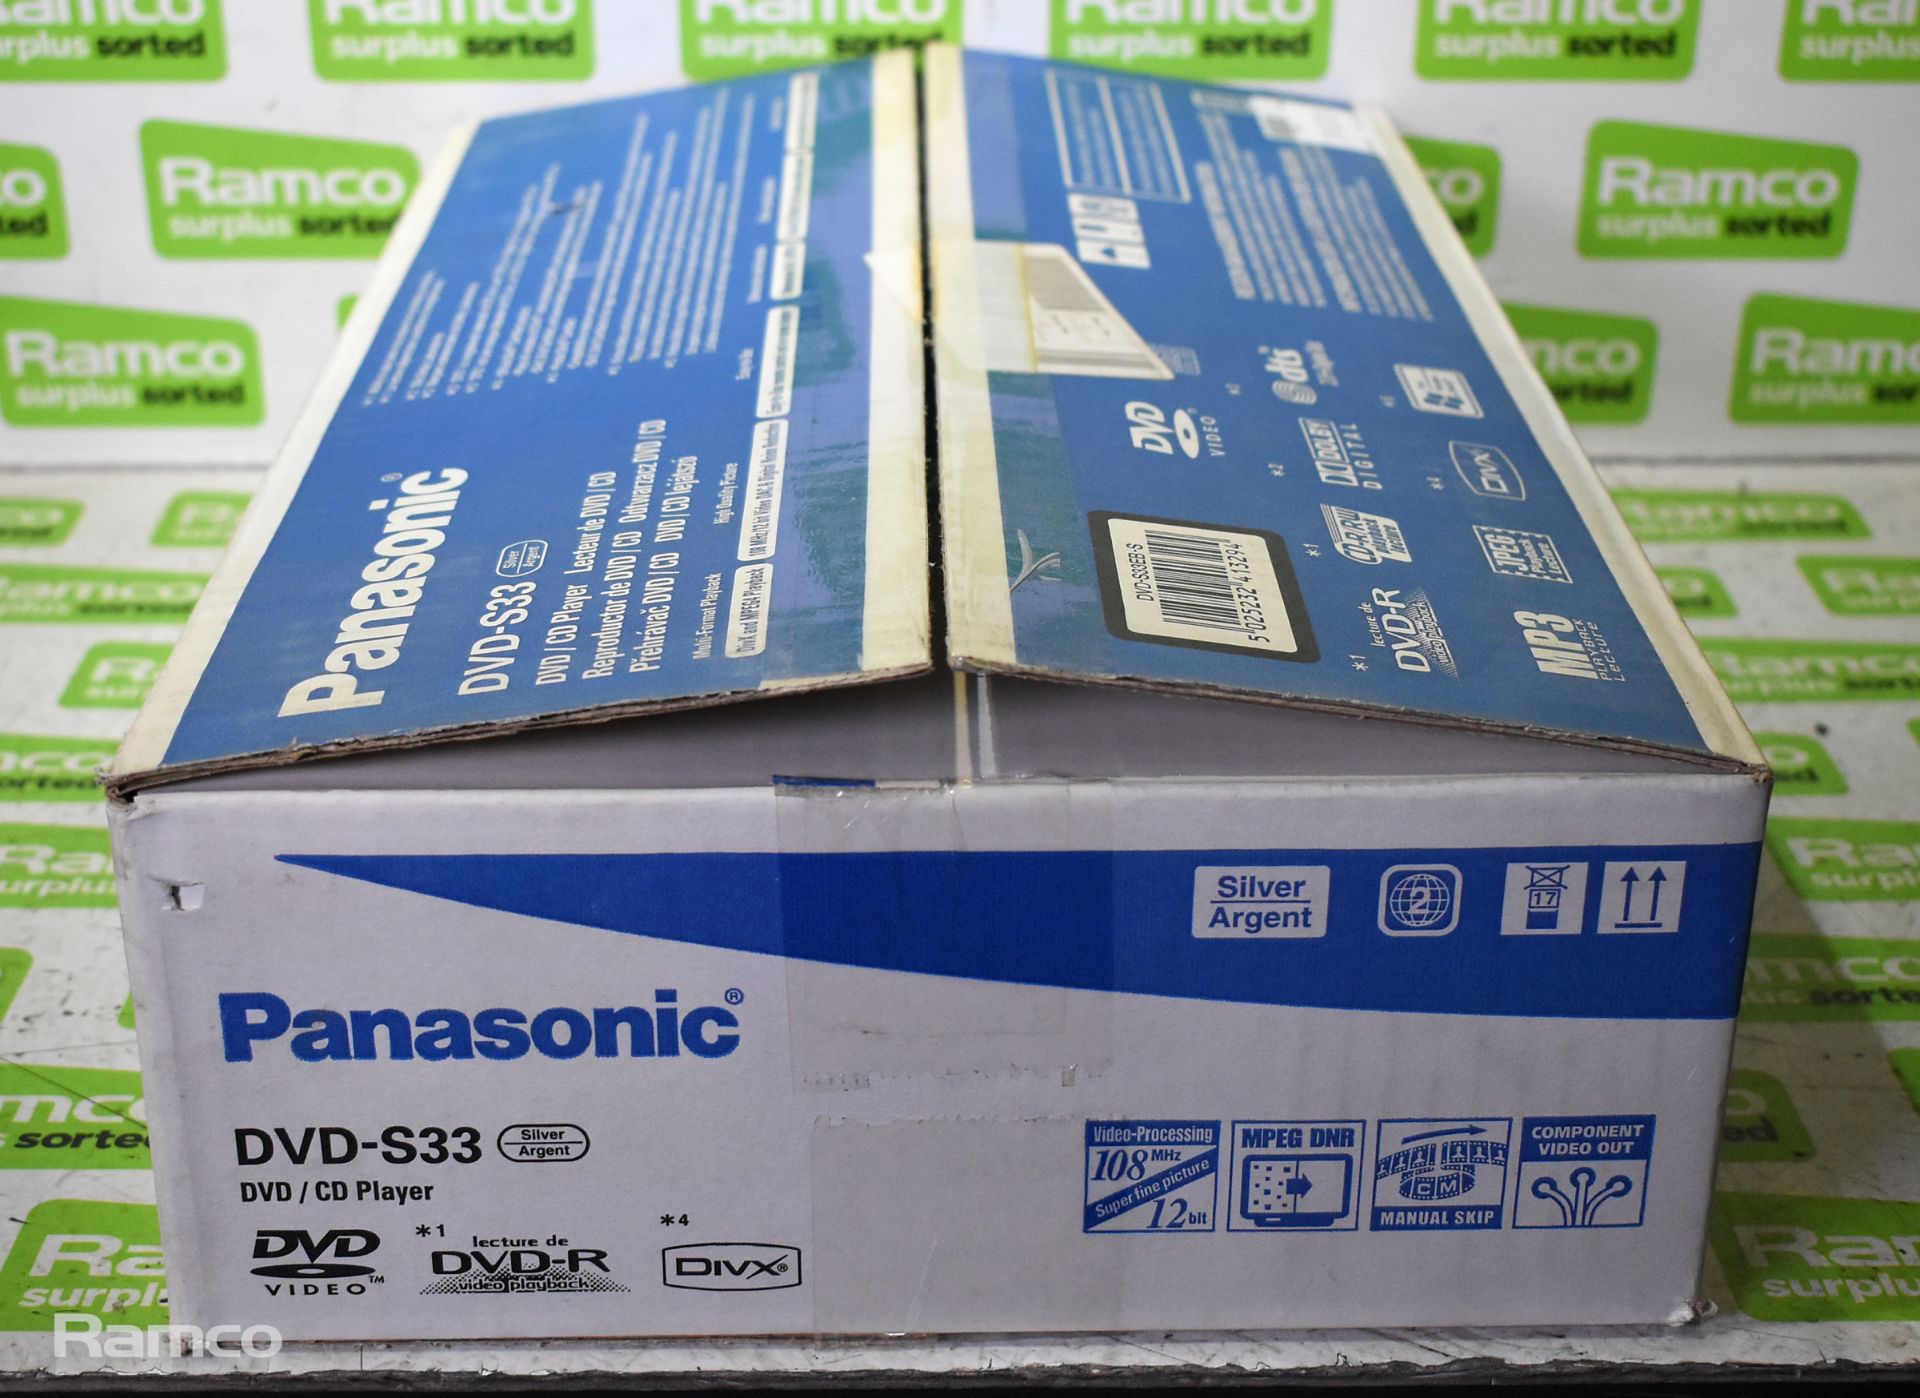 Panasonic DMP-BD45EB-K Blu-Ray disc player - Black, Panasonic DVD-S33 - DVD/CD player - Image 6 of 8